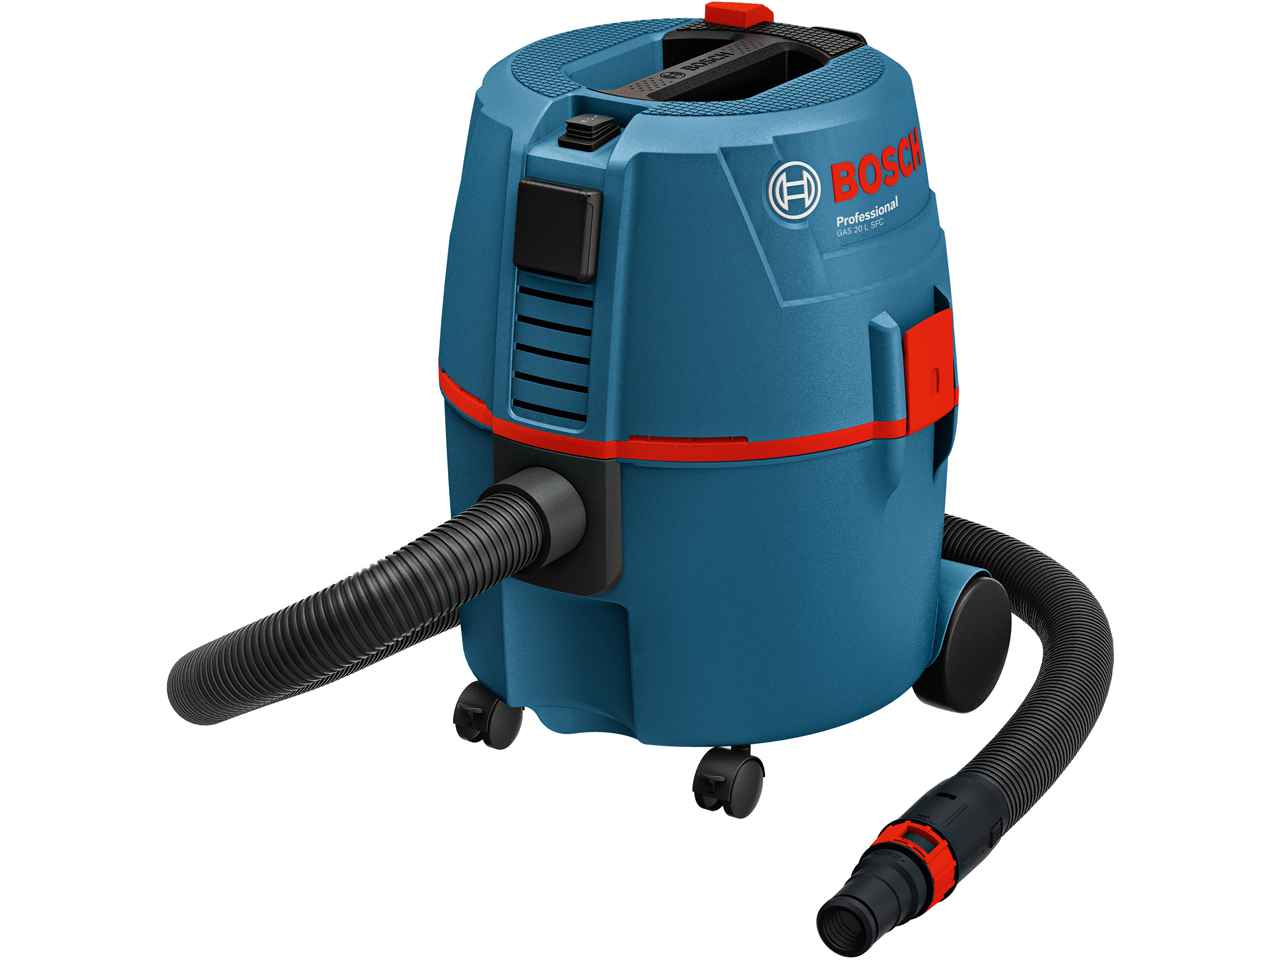 Bosch vacuums uk